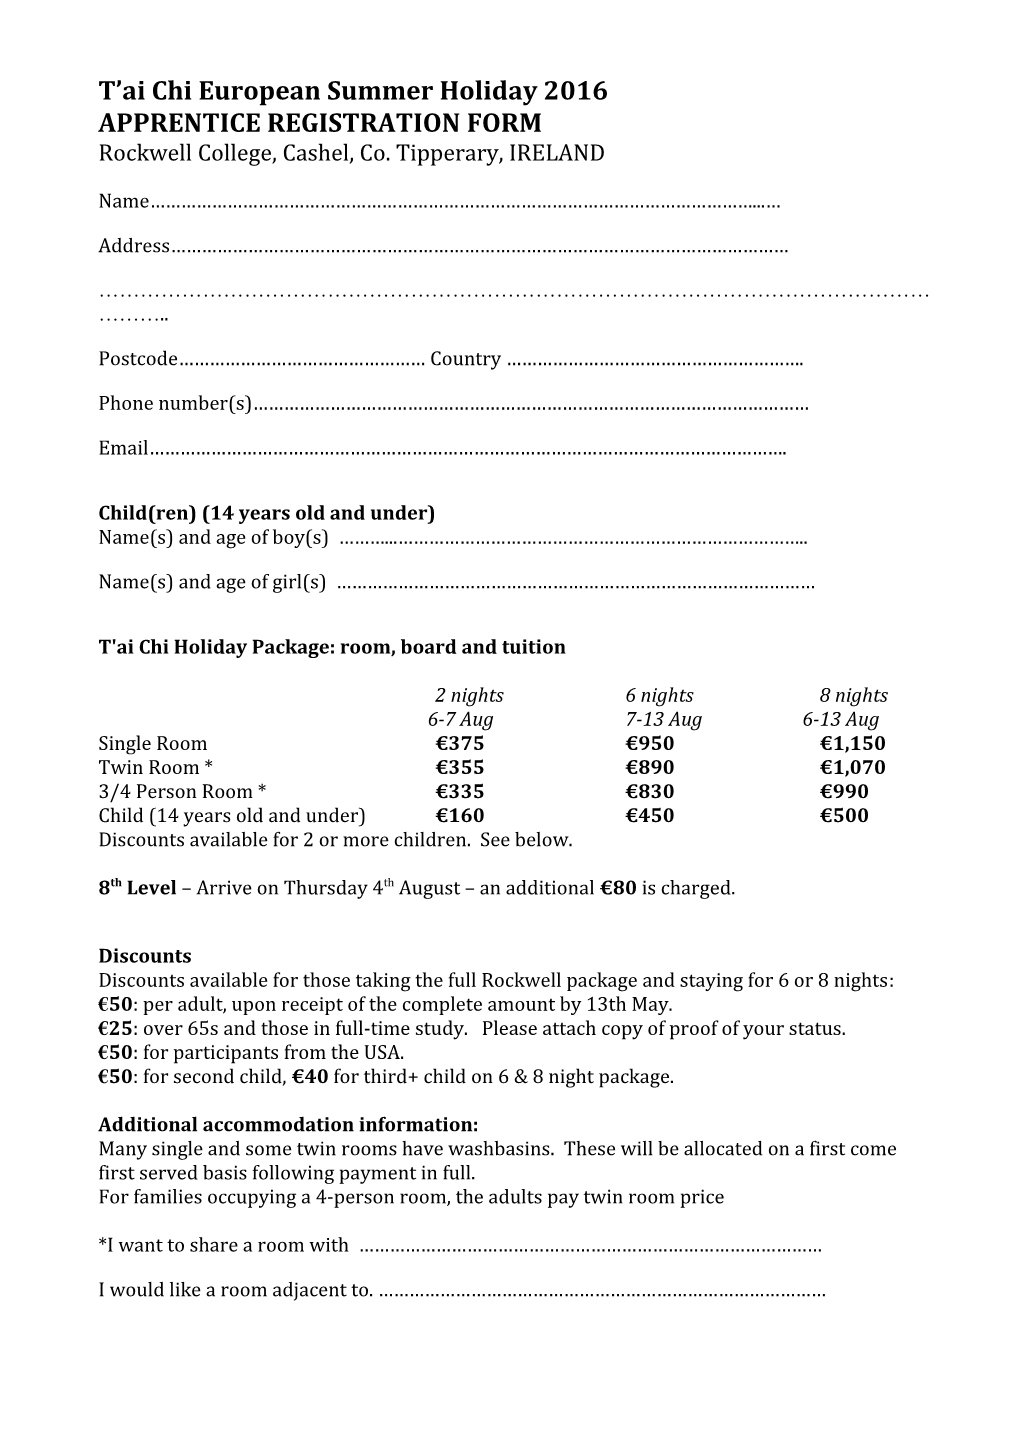 Registration Form Copy